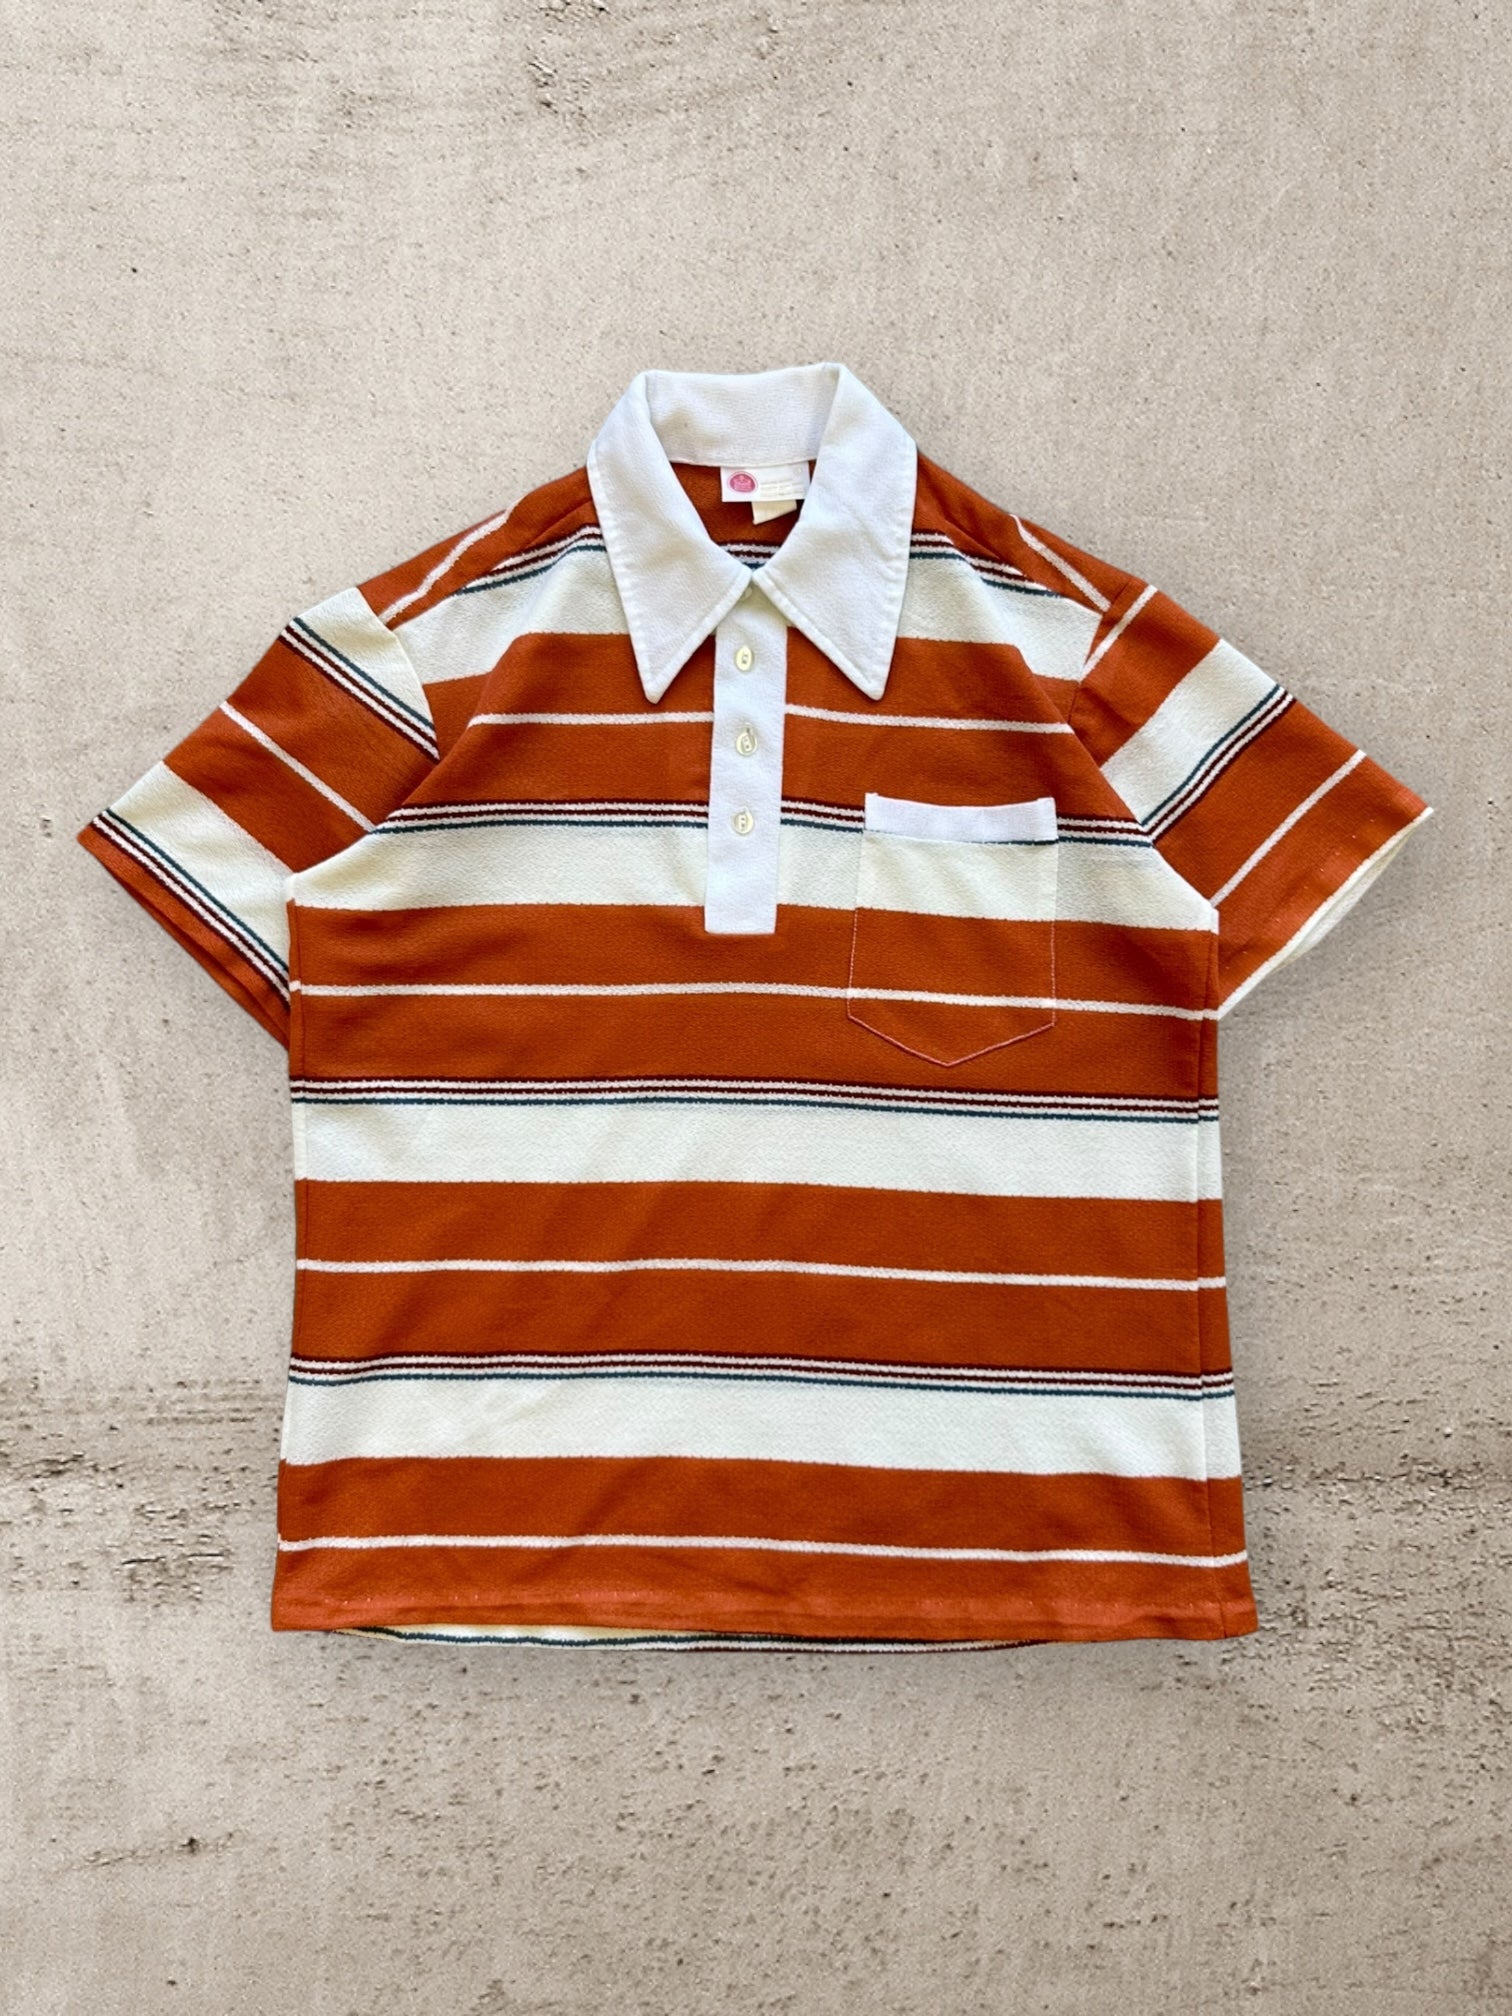 70s Sears Striped Polo Shirt - Medium